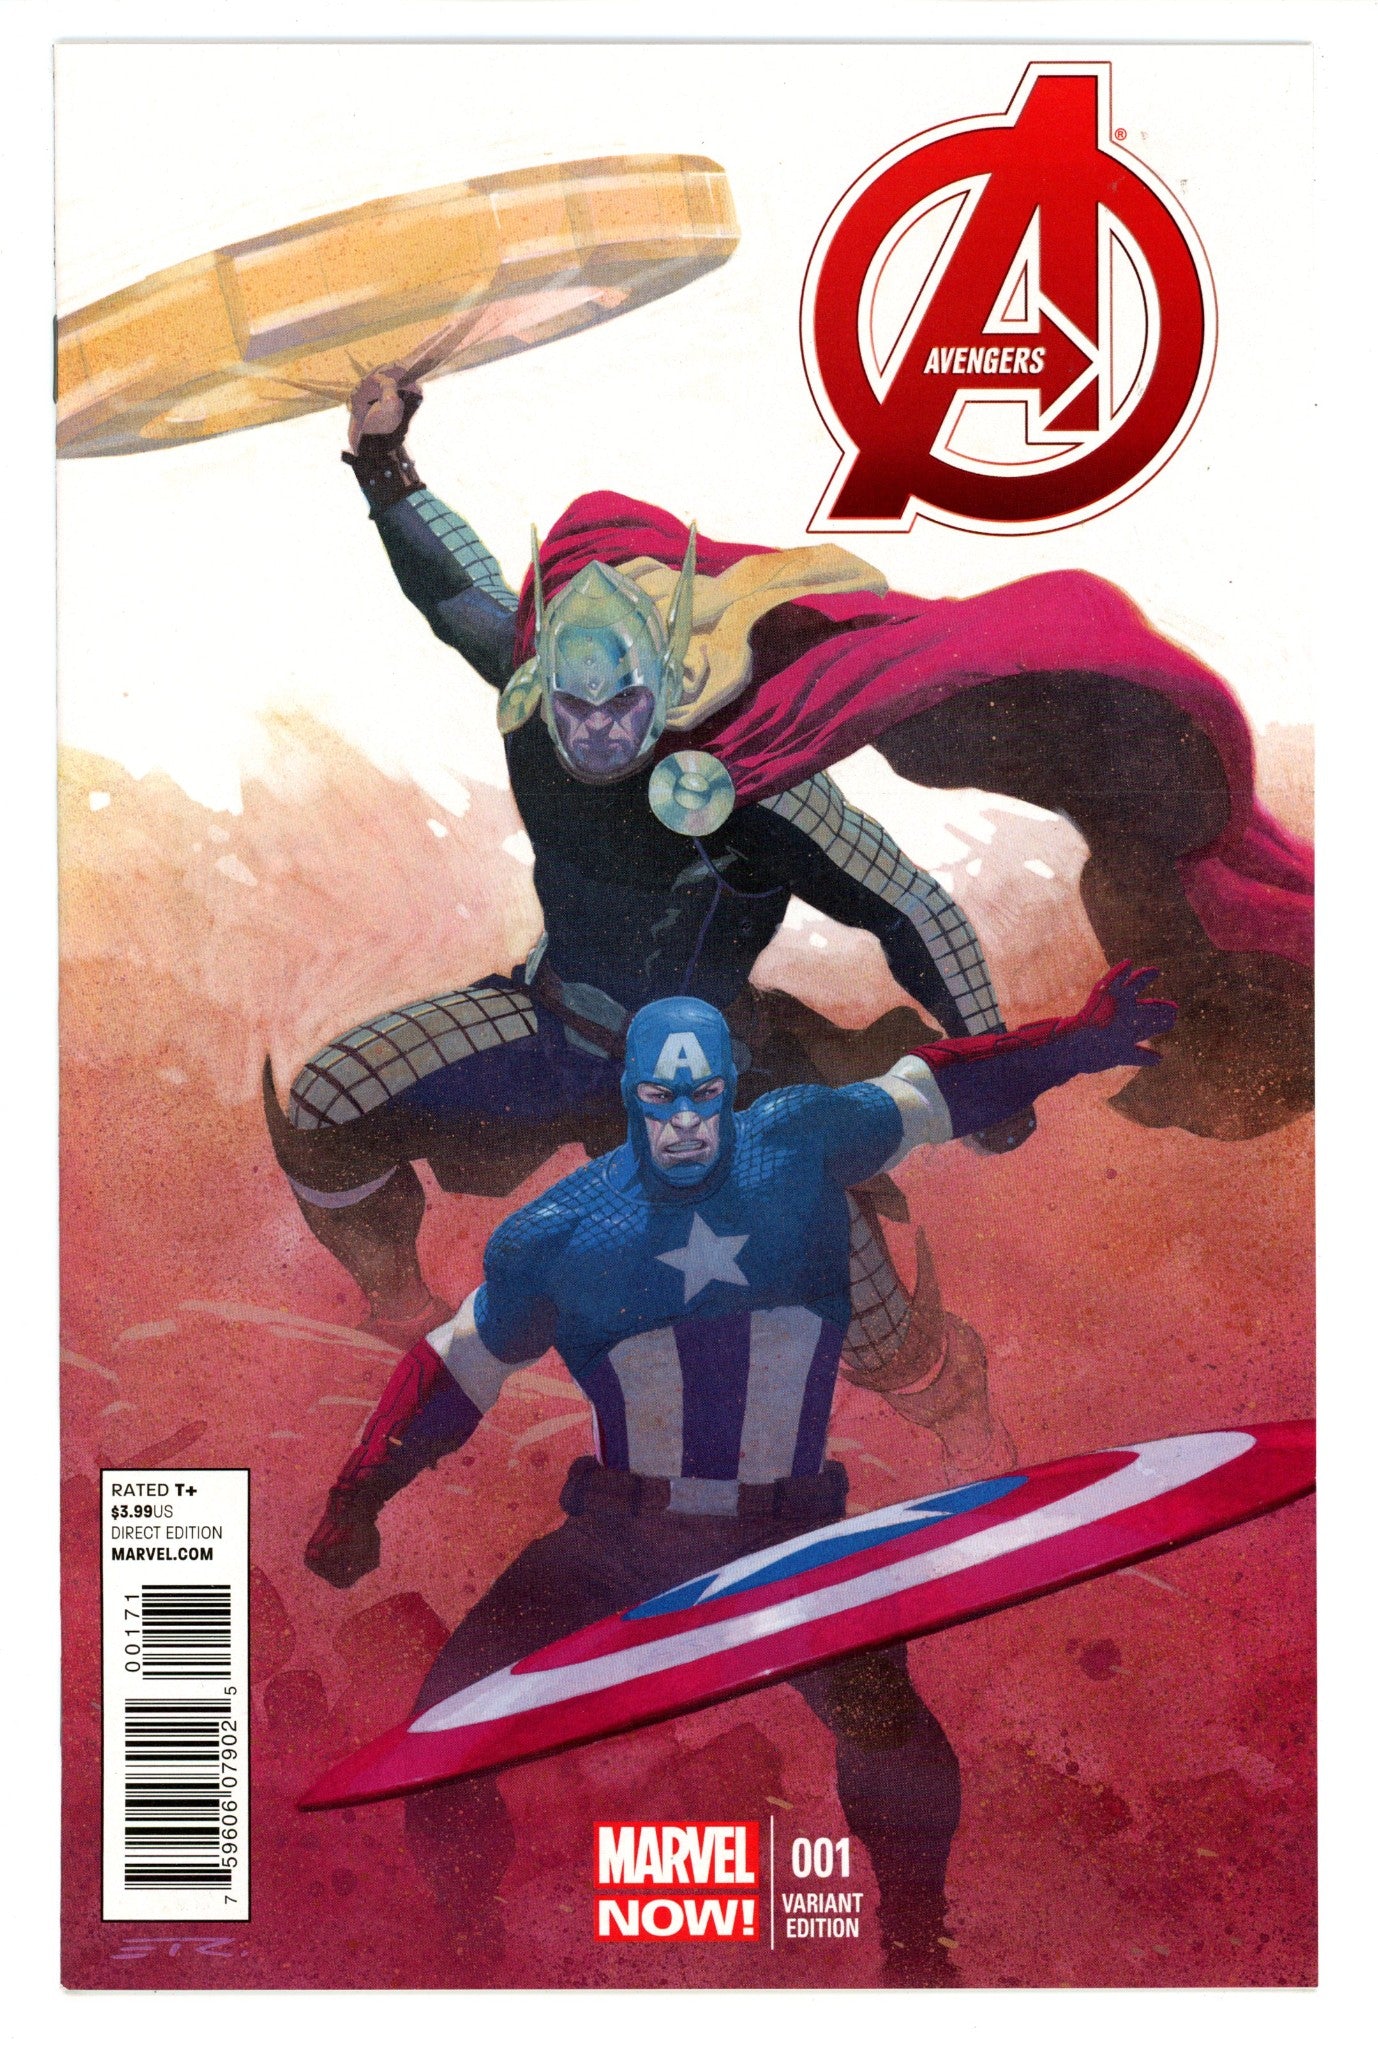 Avengers Vol 5 1 NM- (9.2) (2013) Ribic Incentive Variant 